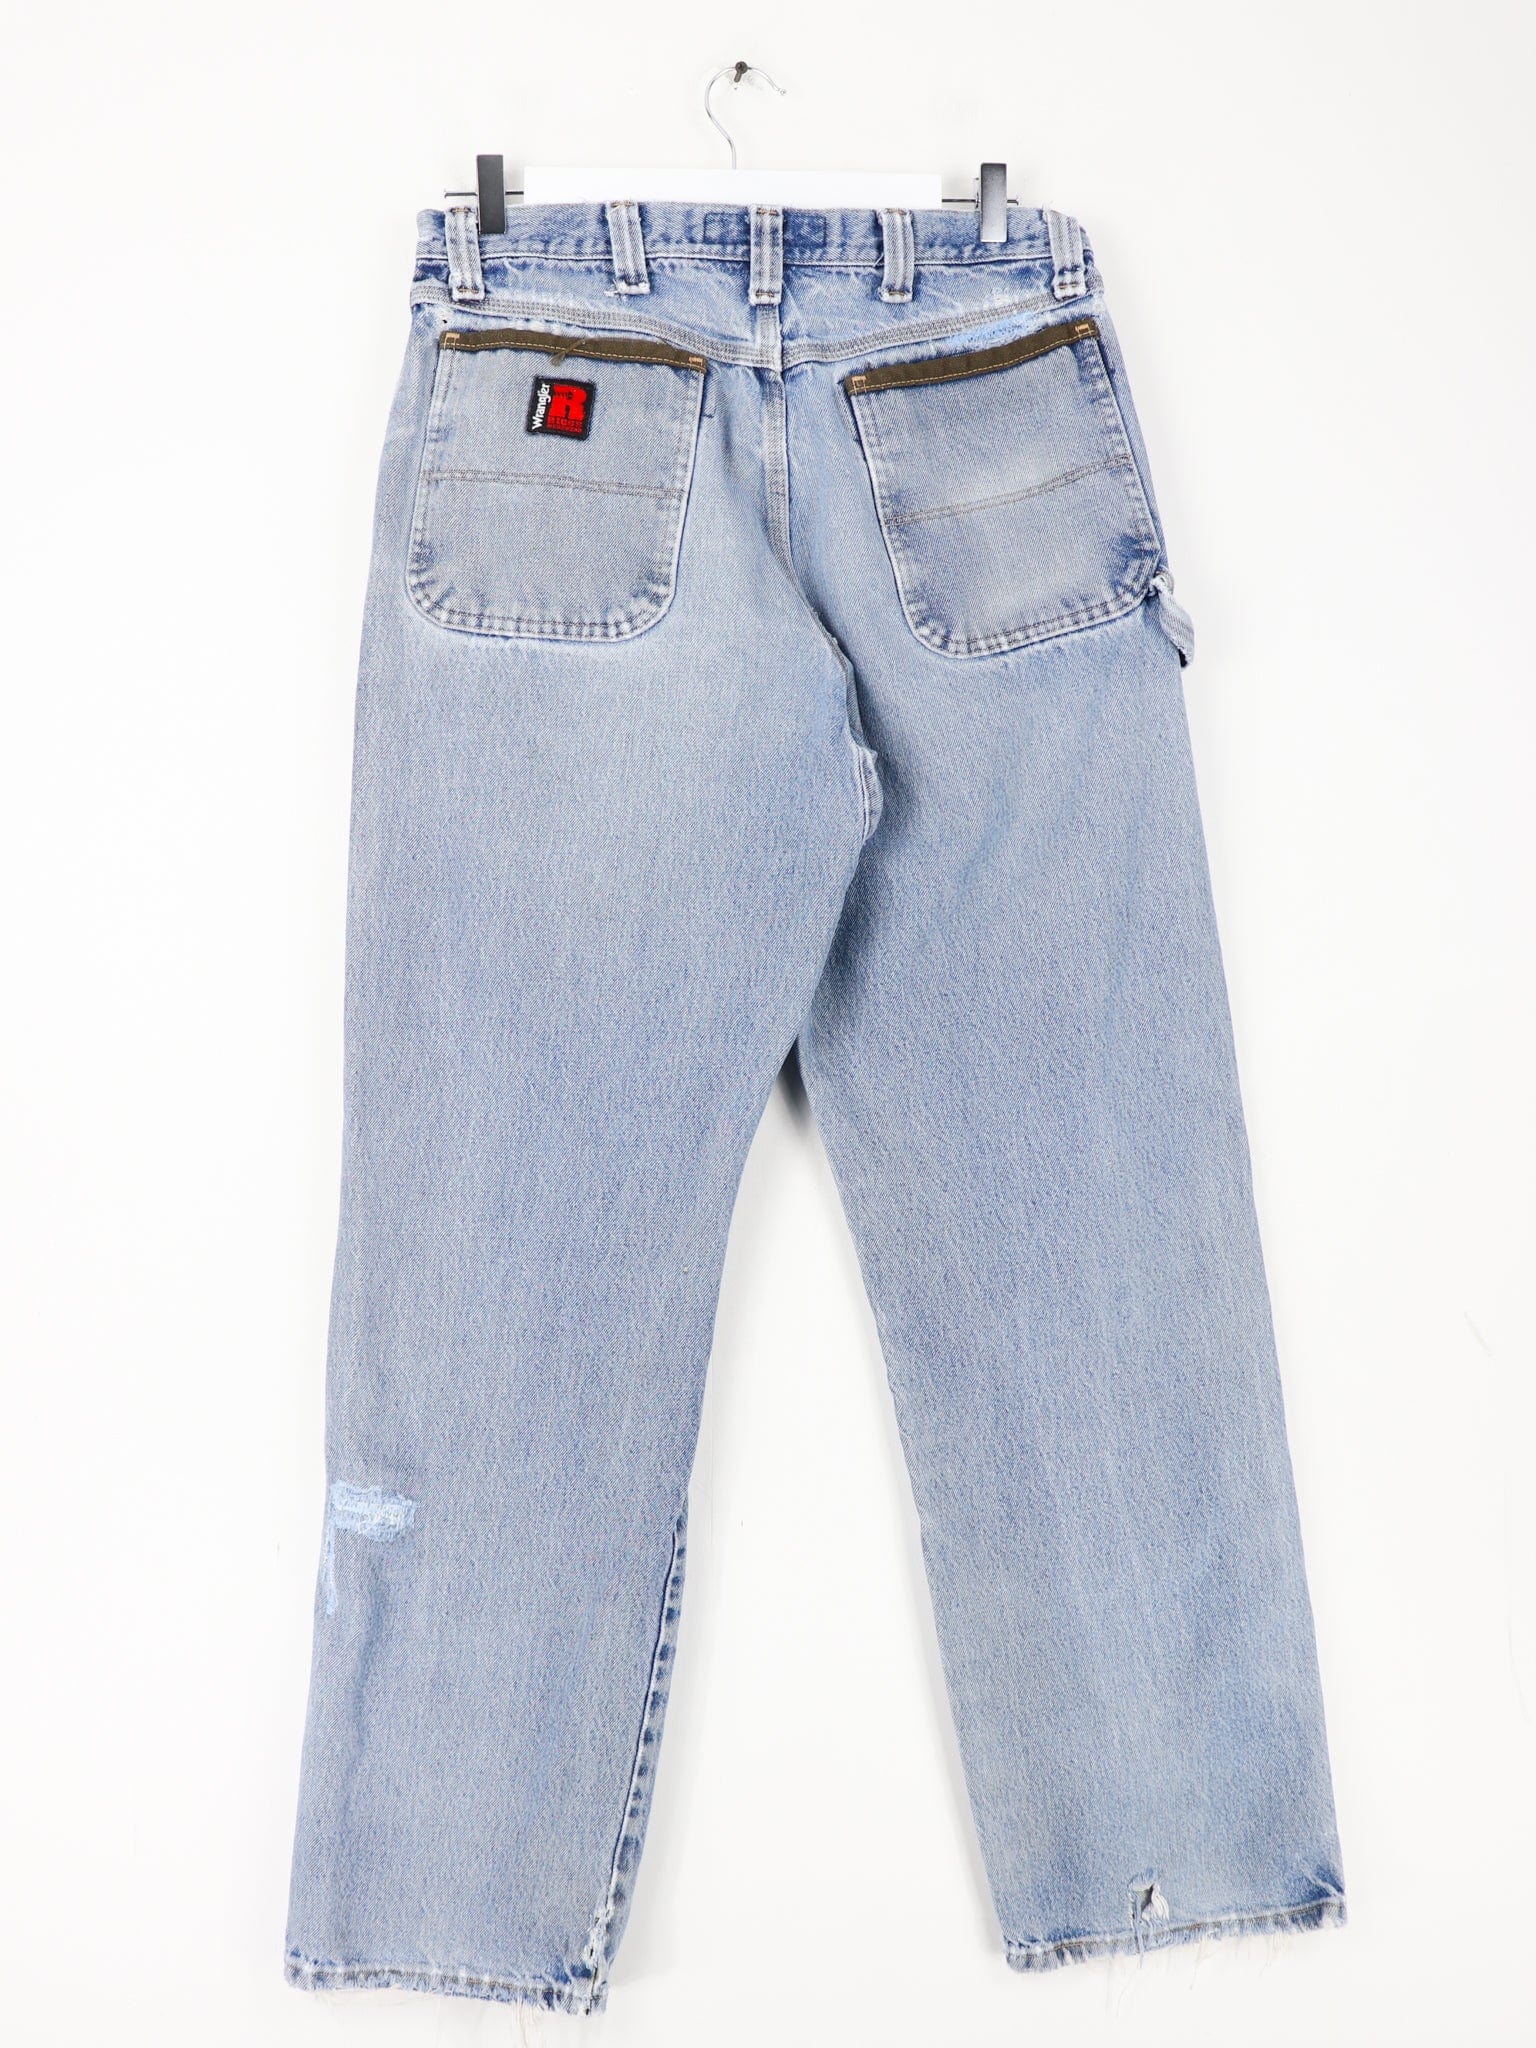 Vintage Wrangler Riggs Workwear Distressed Denim Jeans Size 34 x 34